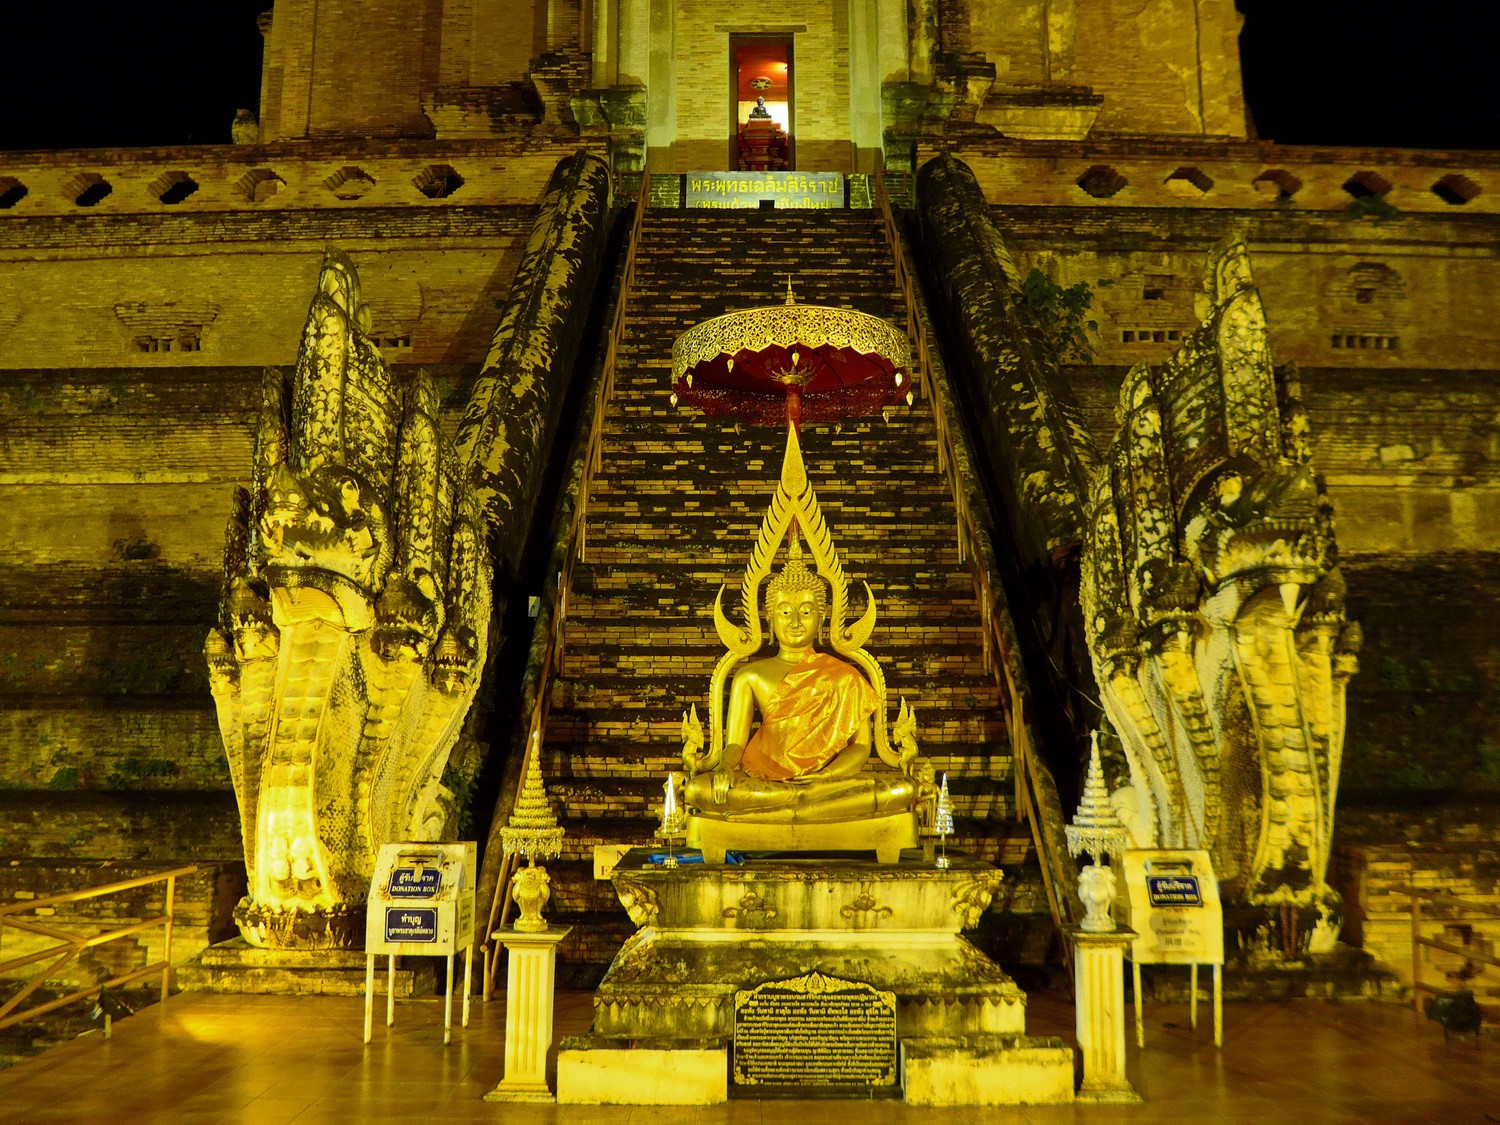 Entrance of Wat Chedi Luang